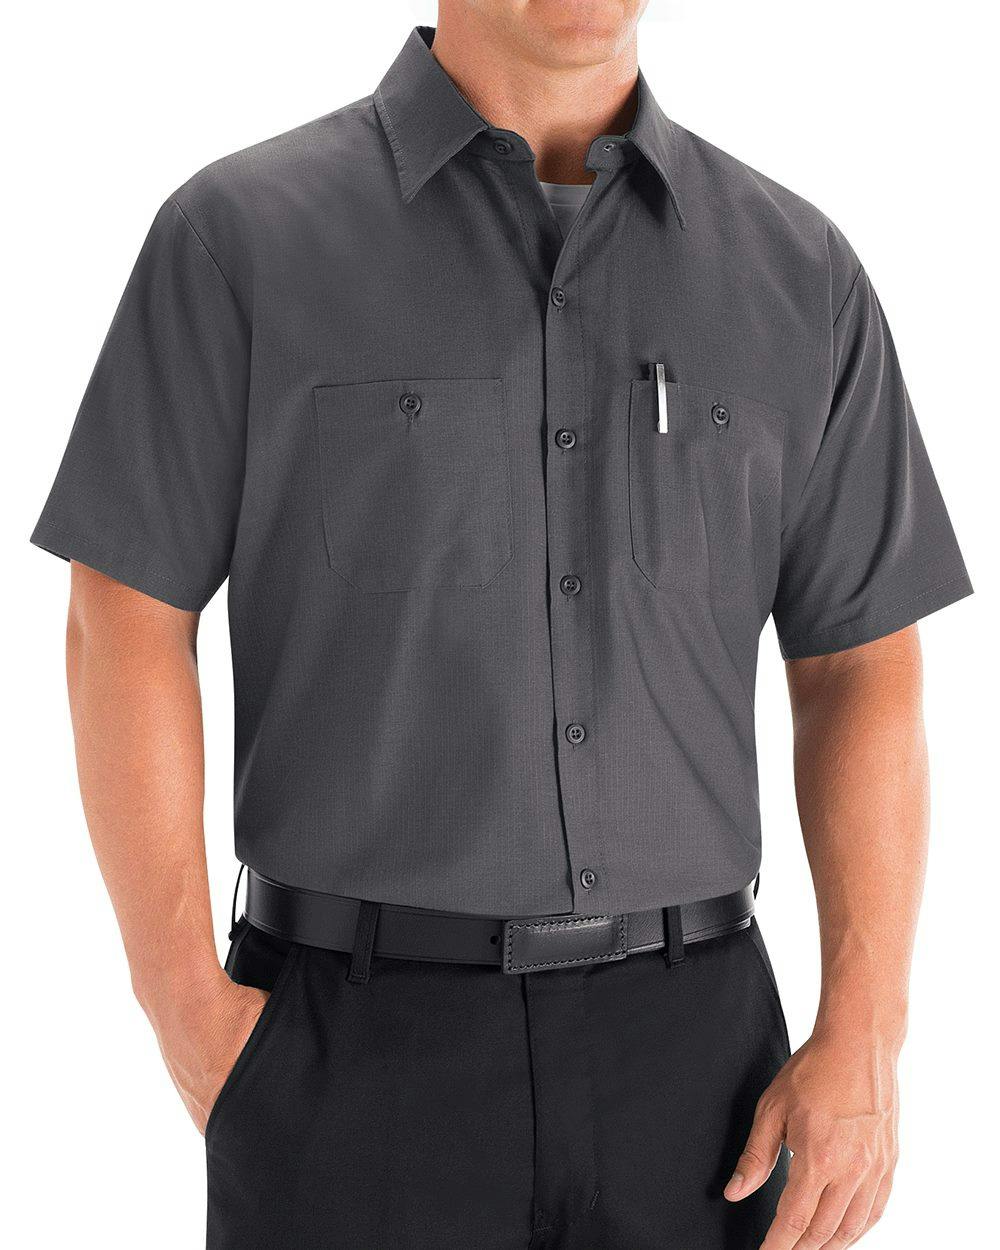 Image for Mimix™ Short Sleeve Work Shirt - Tall Sizes - SX20T